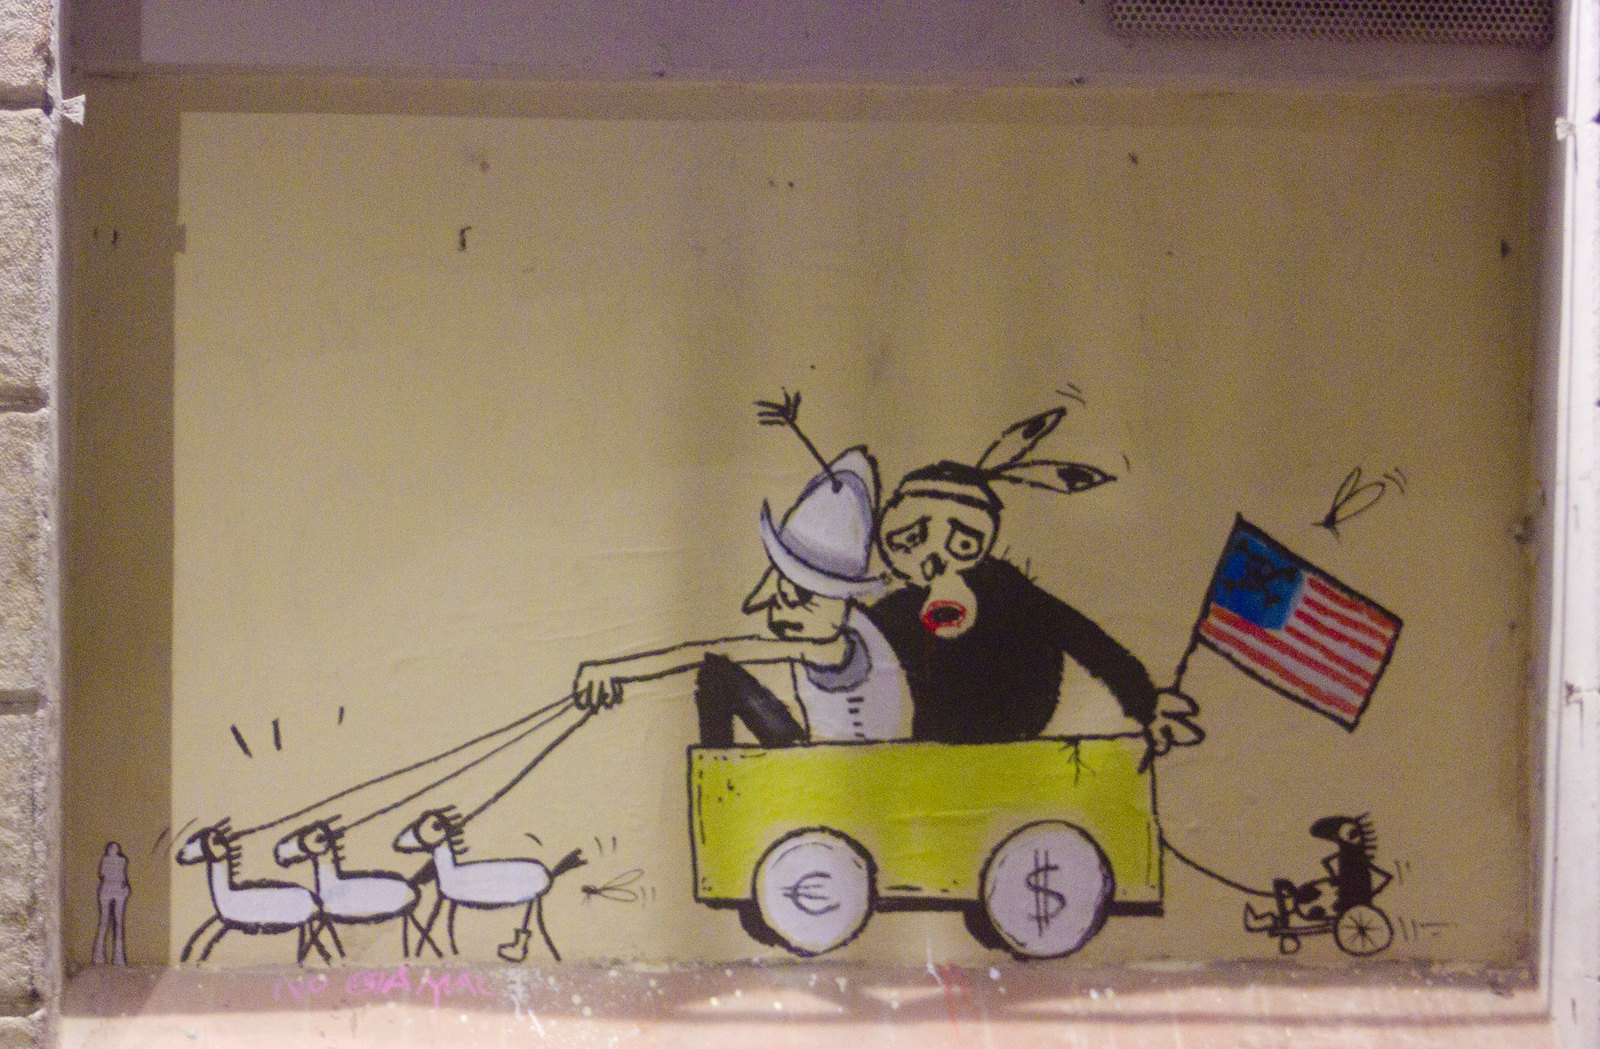 grafittis in barcelona and street advertising